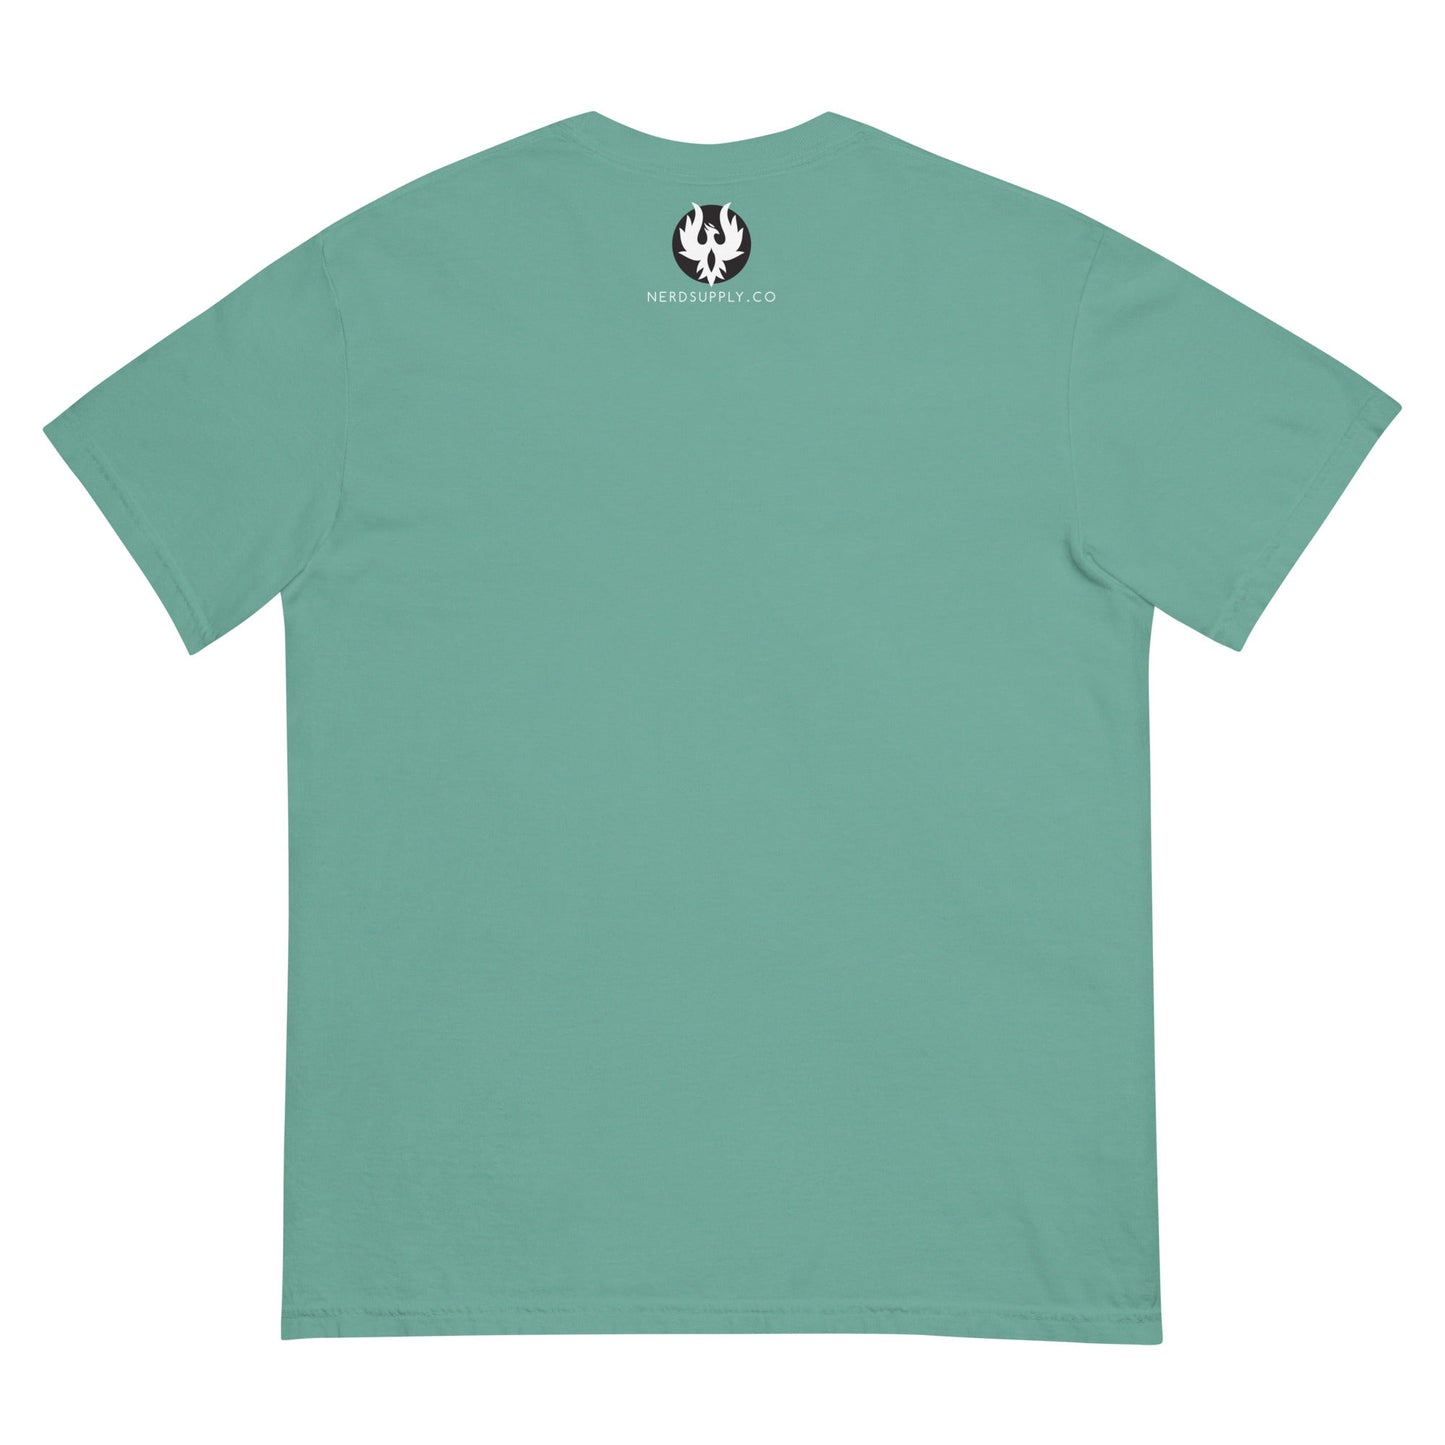 "Deranged Combat" t-shirt - The Nerd Supply Company